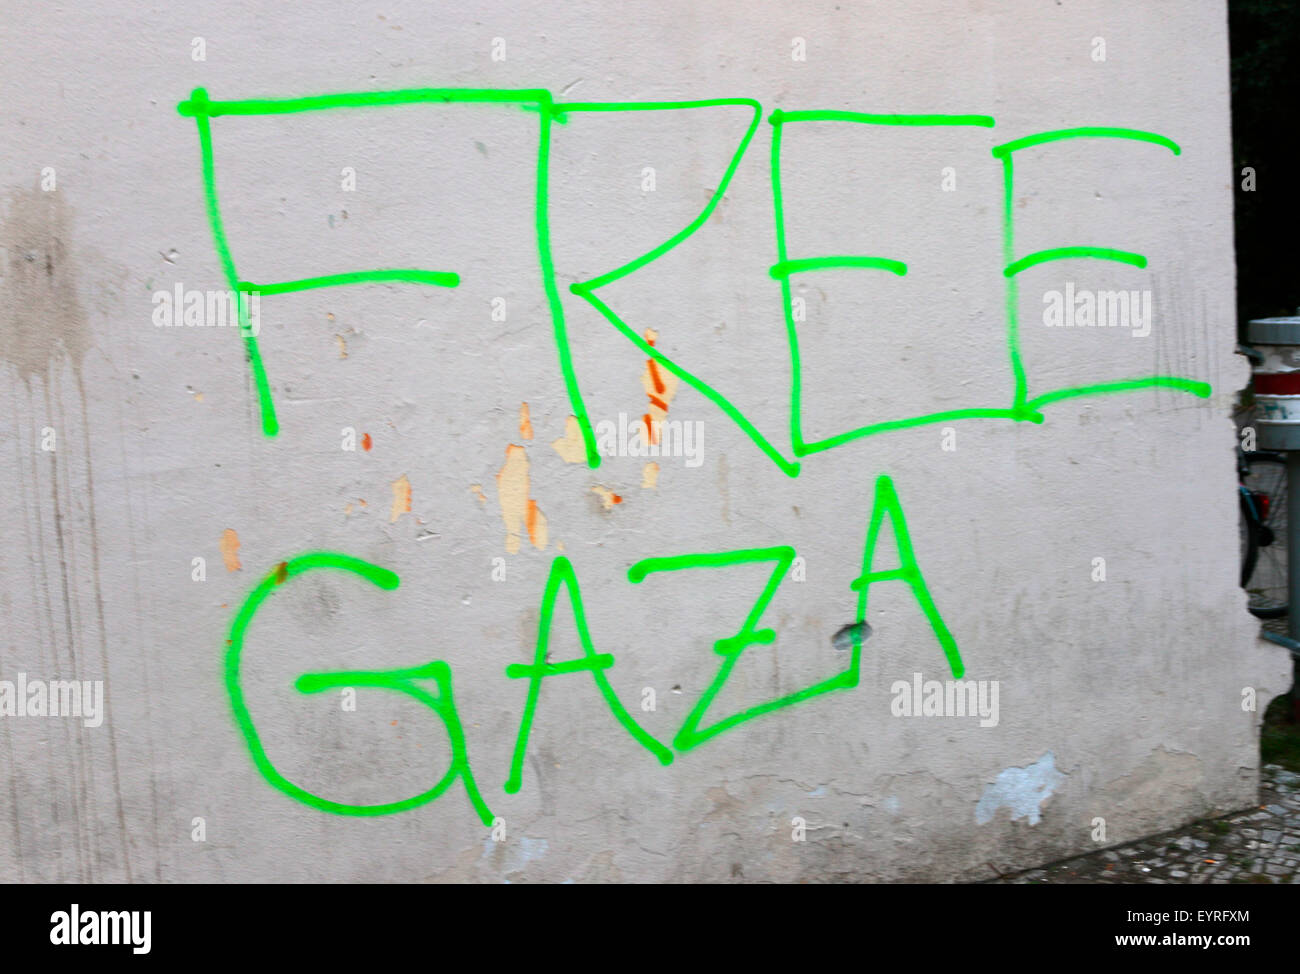 Politischer slogan "Free Gaza", Berlín. Foto de stock